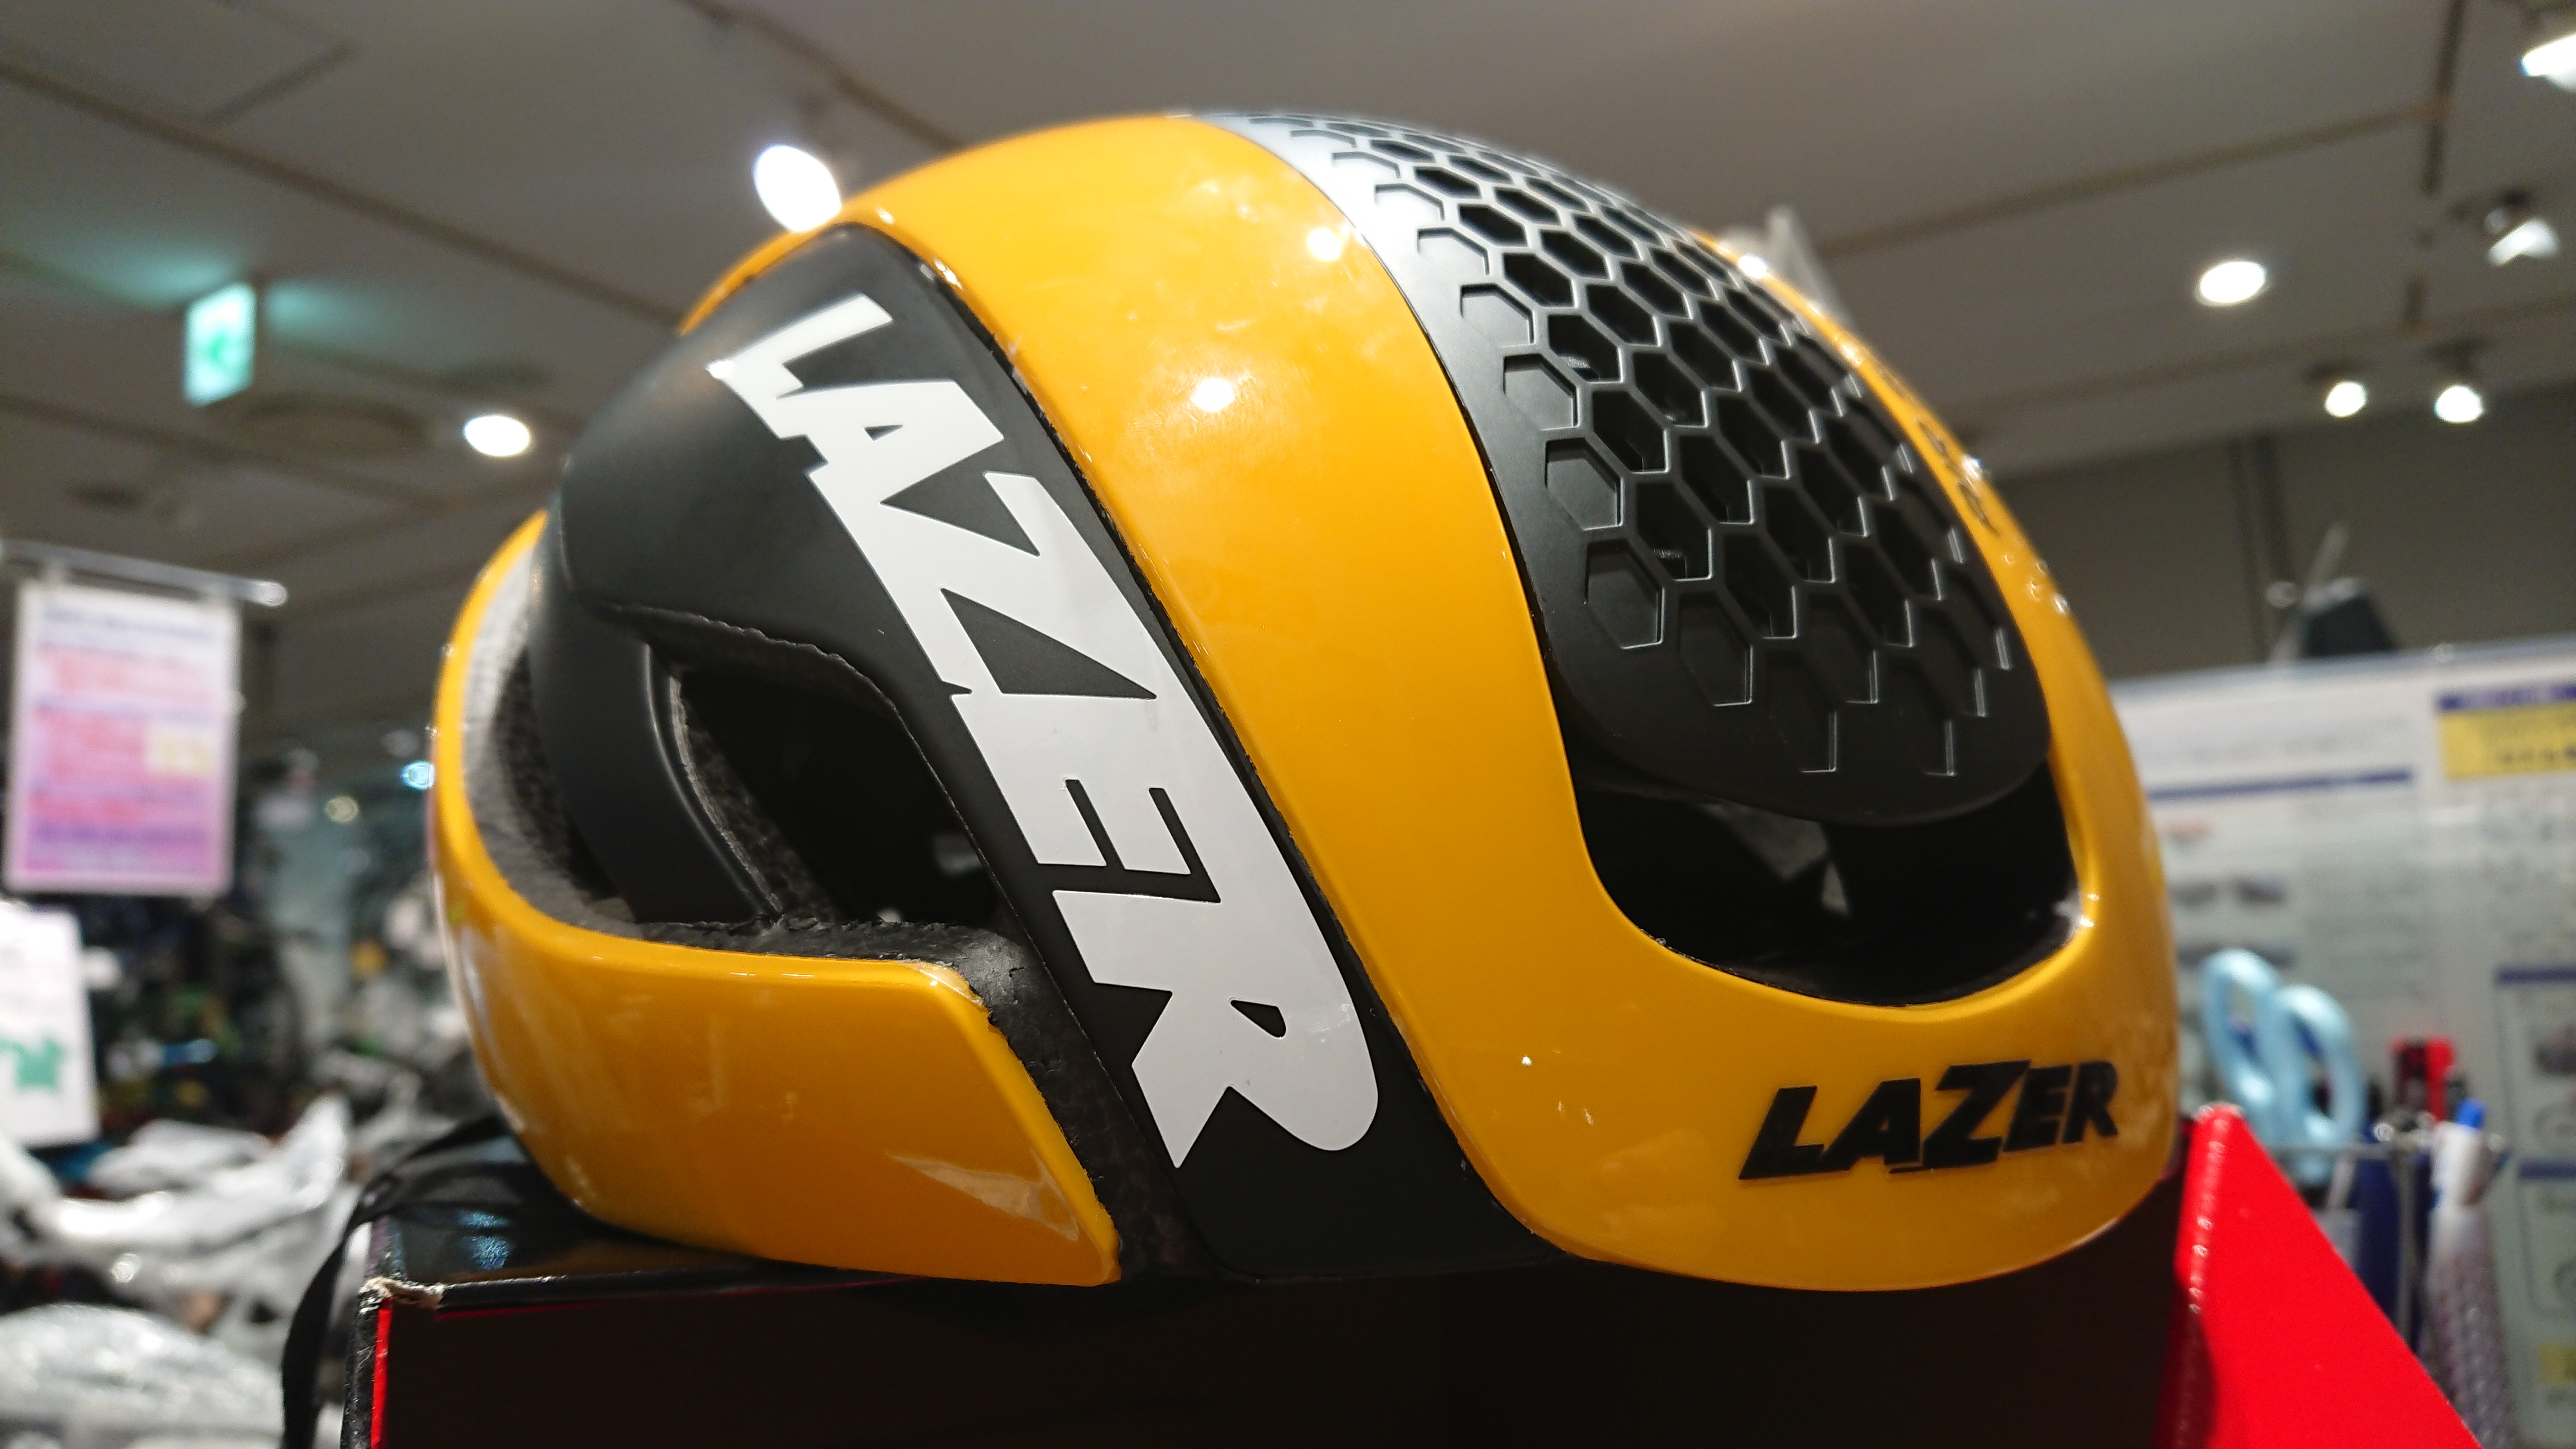 LAZER Bullet 2.0 AF ユンボ・ビスマ チームカラー入荷しました サイクルスポットル・サイク海老名店 | 自転車専門店  サイクルスポット/ル・サイク